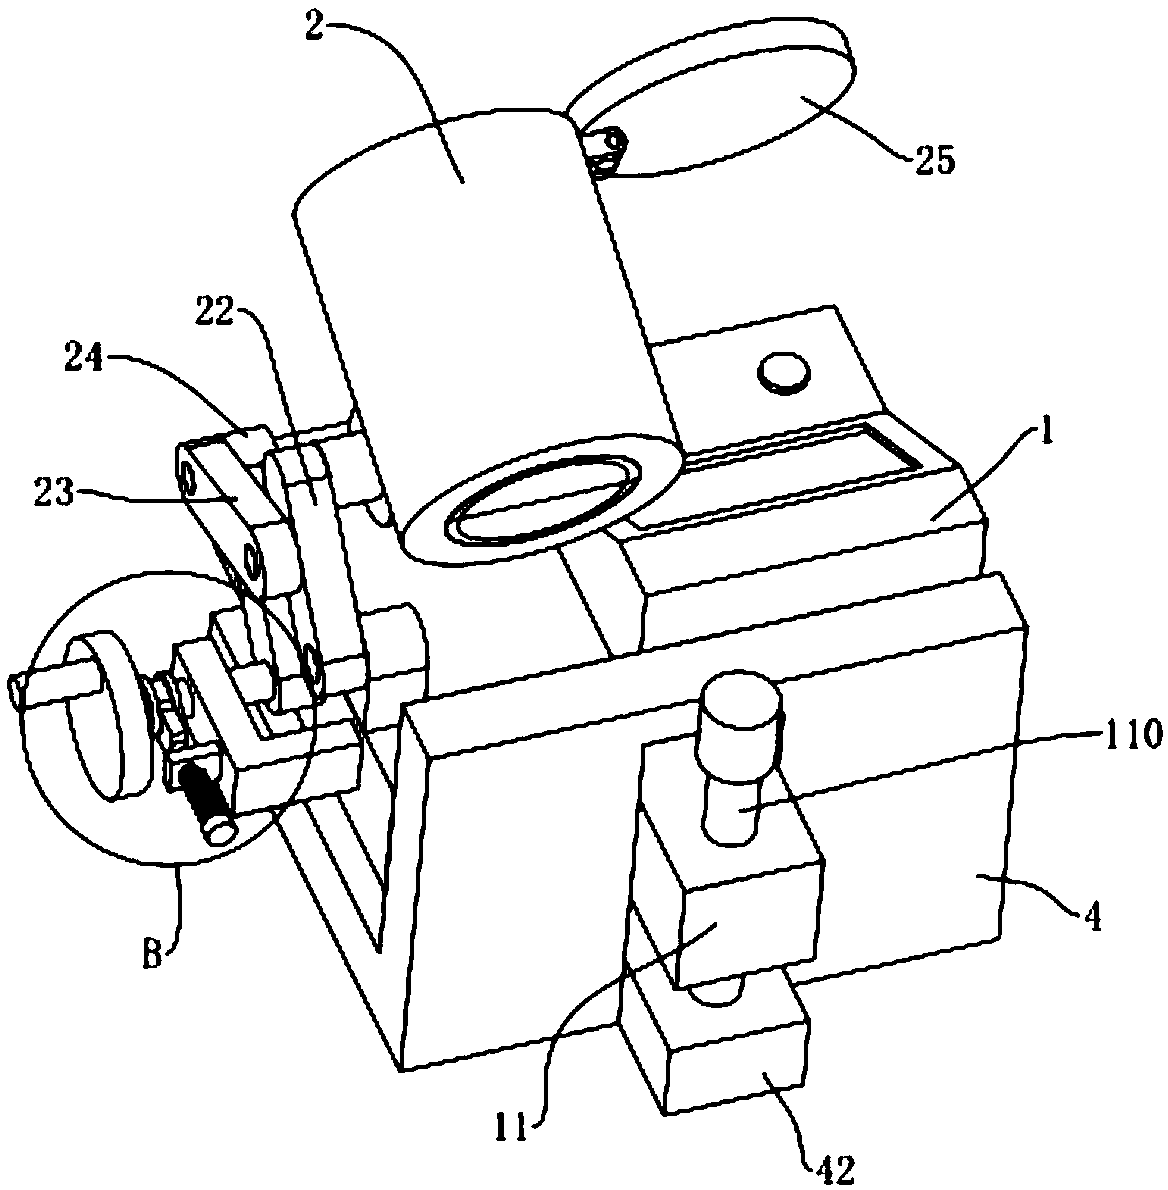 An arm barrel type electronic sphygmomanometer